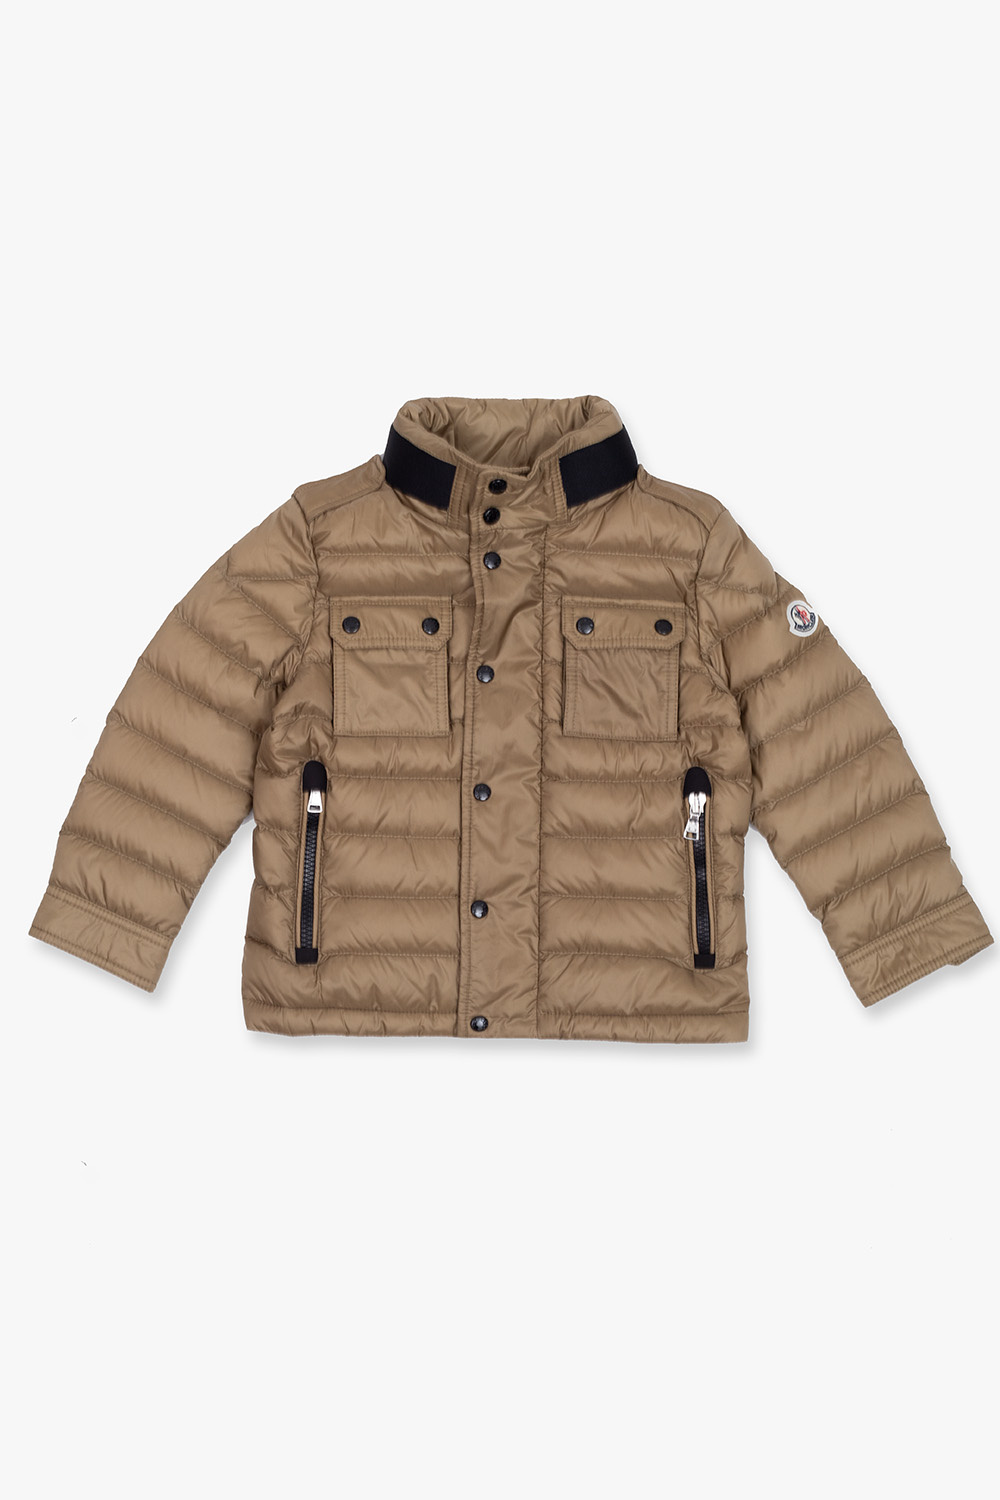 Moncler Enfant ‘Arakim’ down jacket